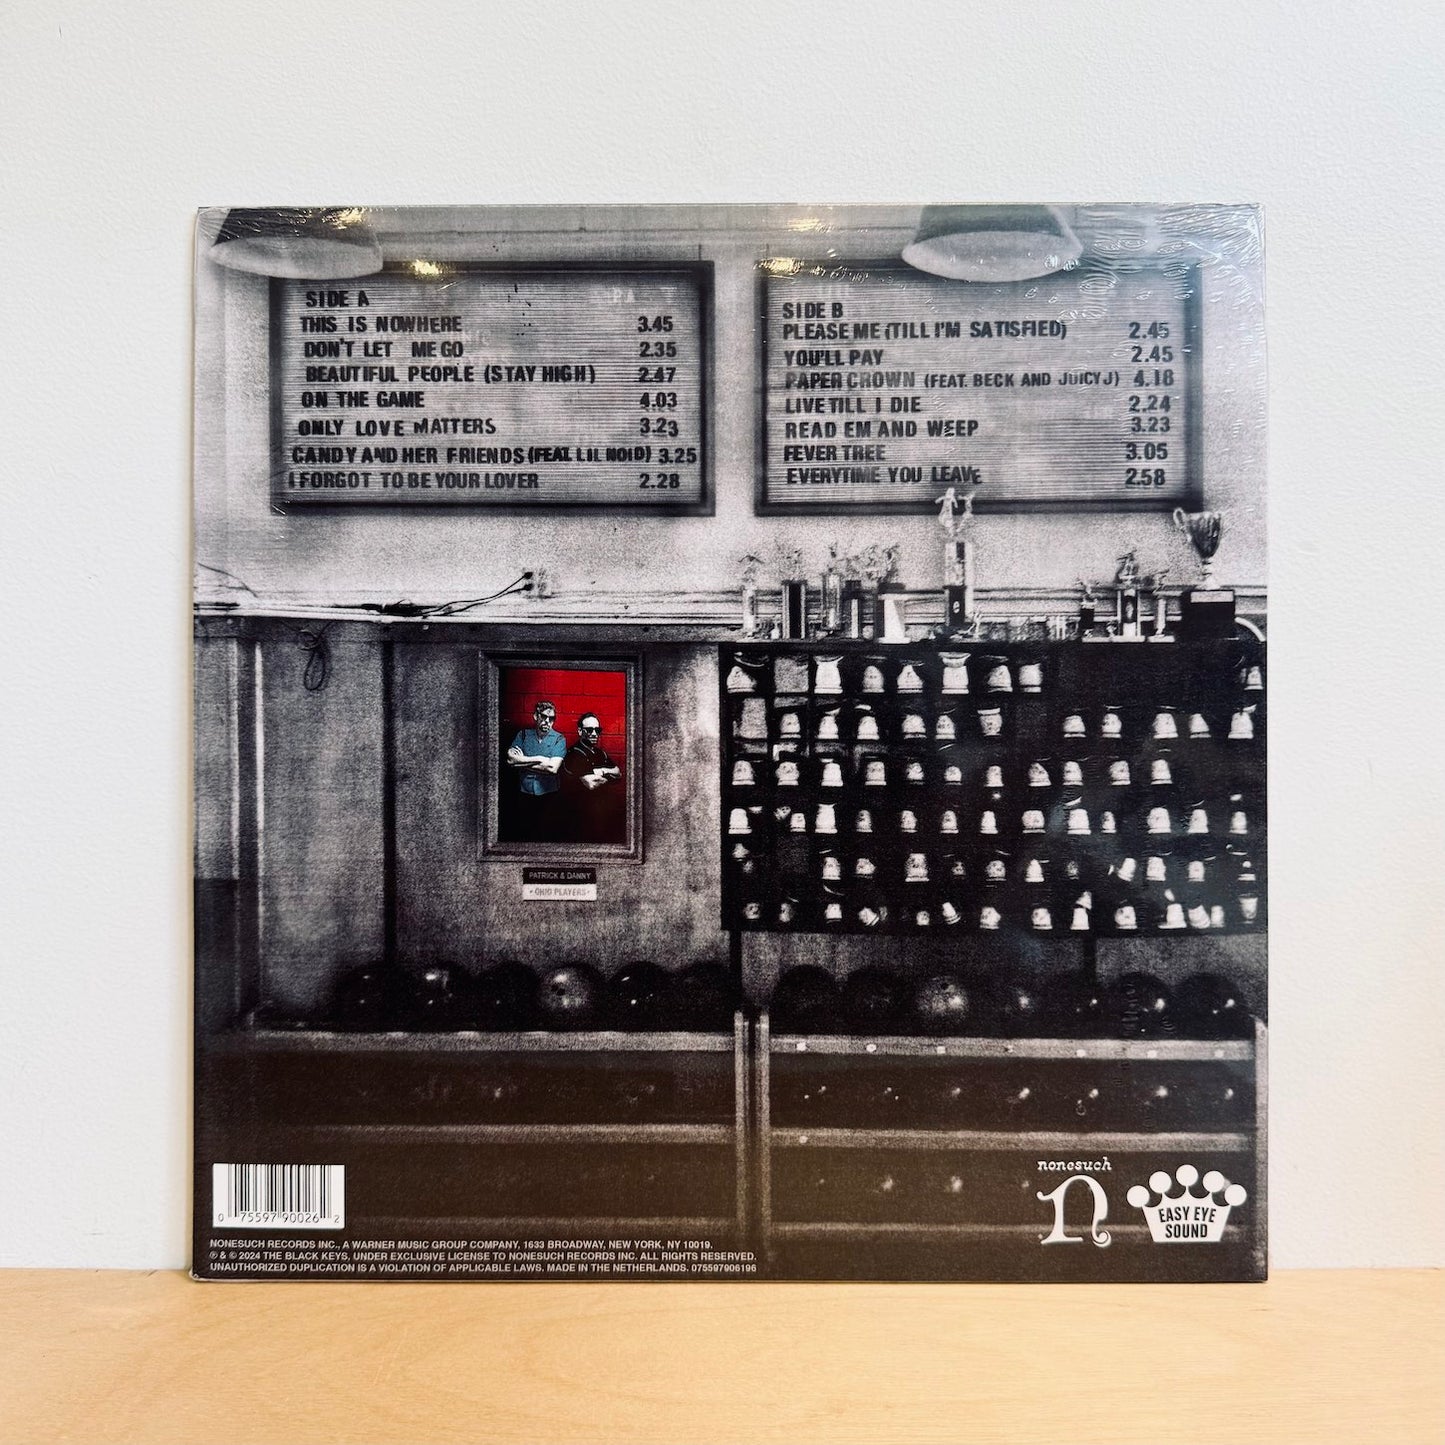 The Black Keys - Ohio Players. LP [Ltd. Ed. Red Vinyl]